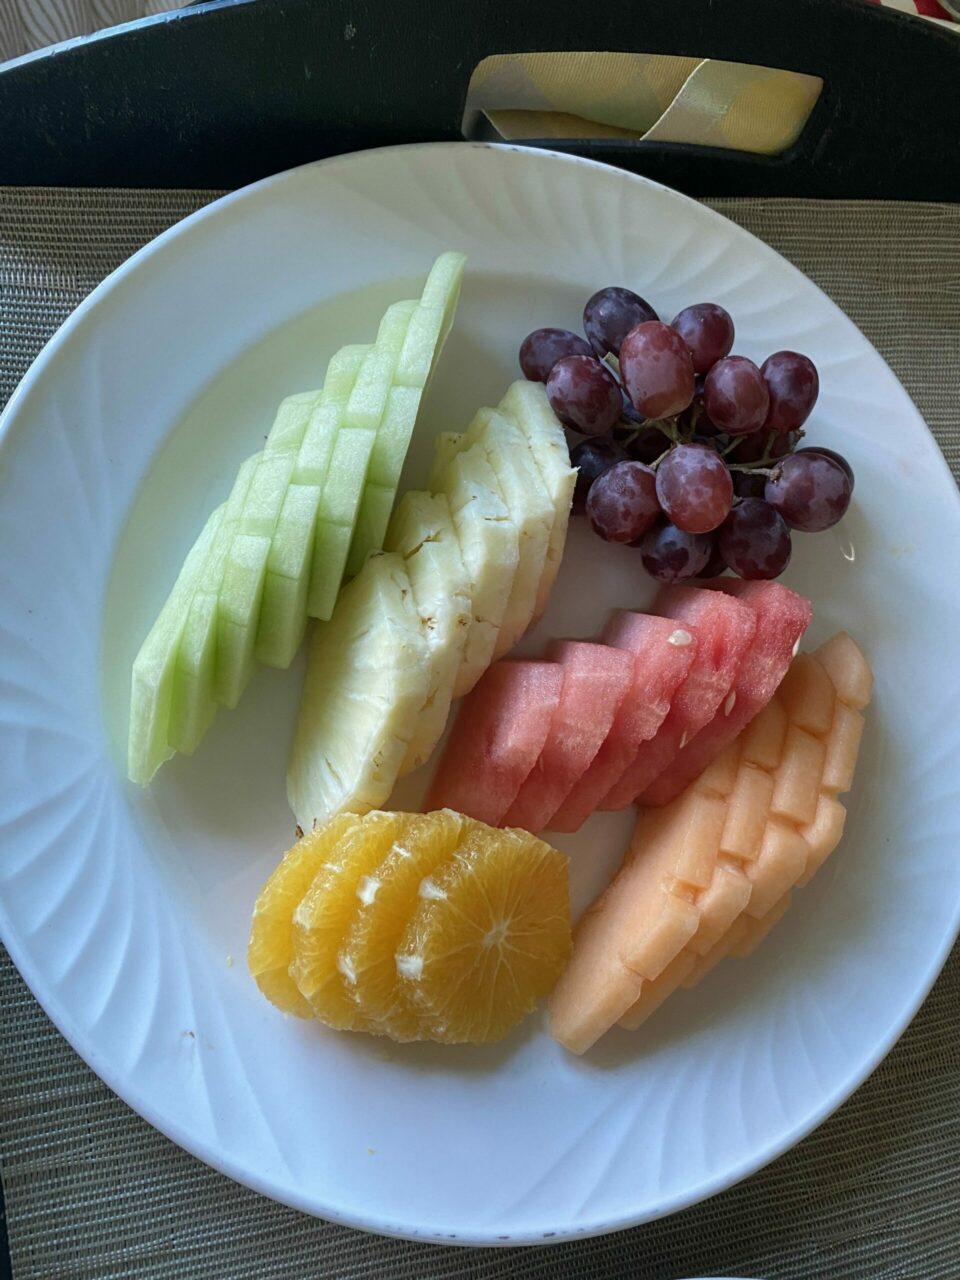 Room service fruit plate